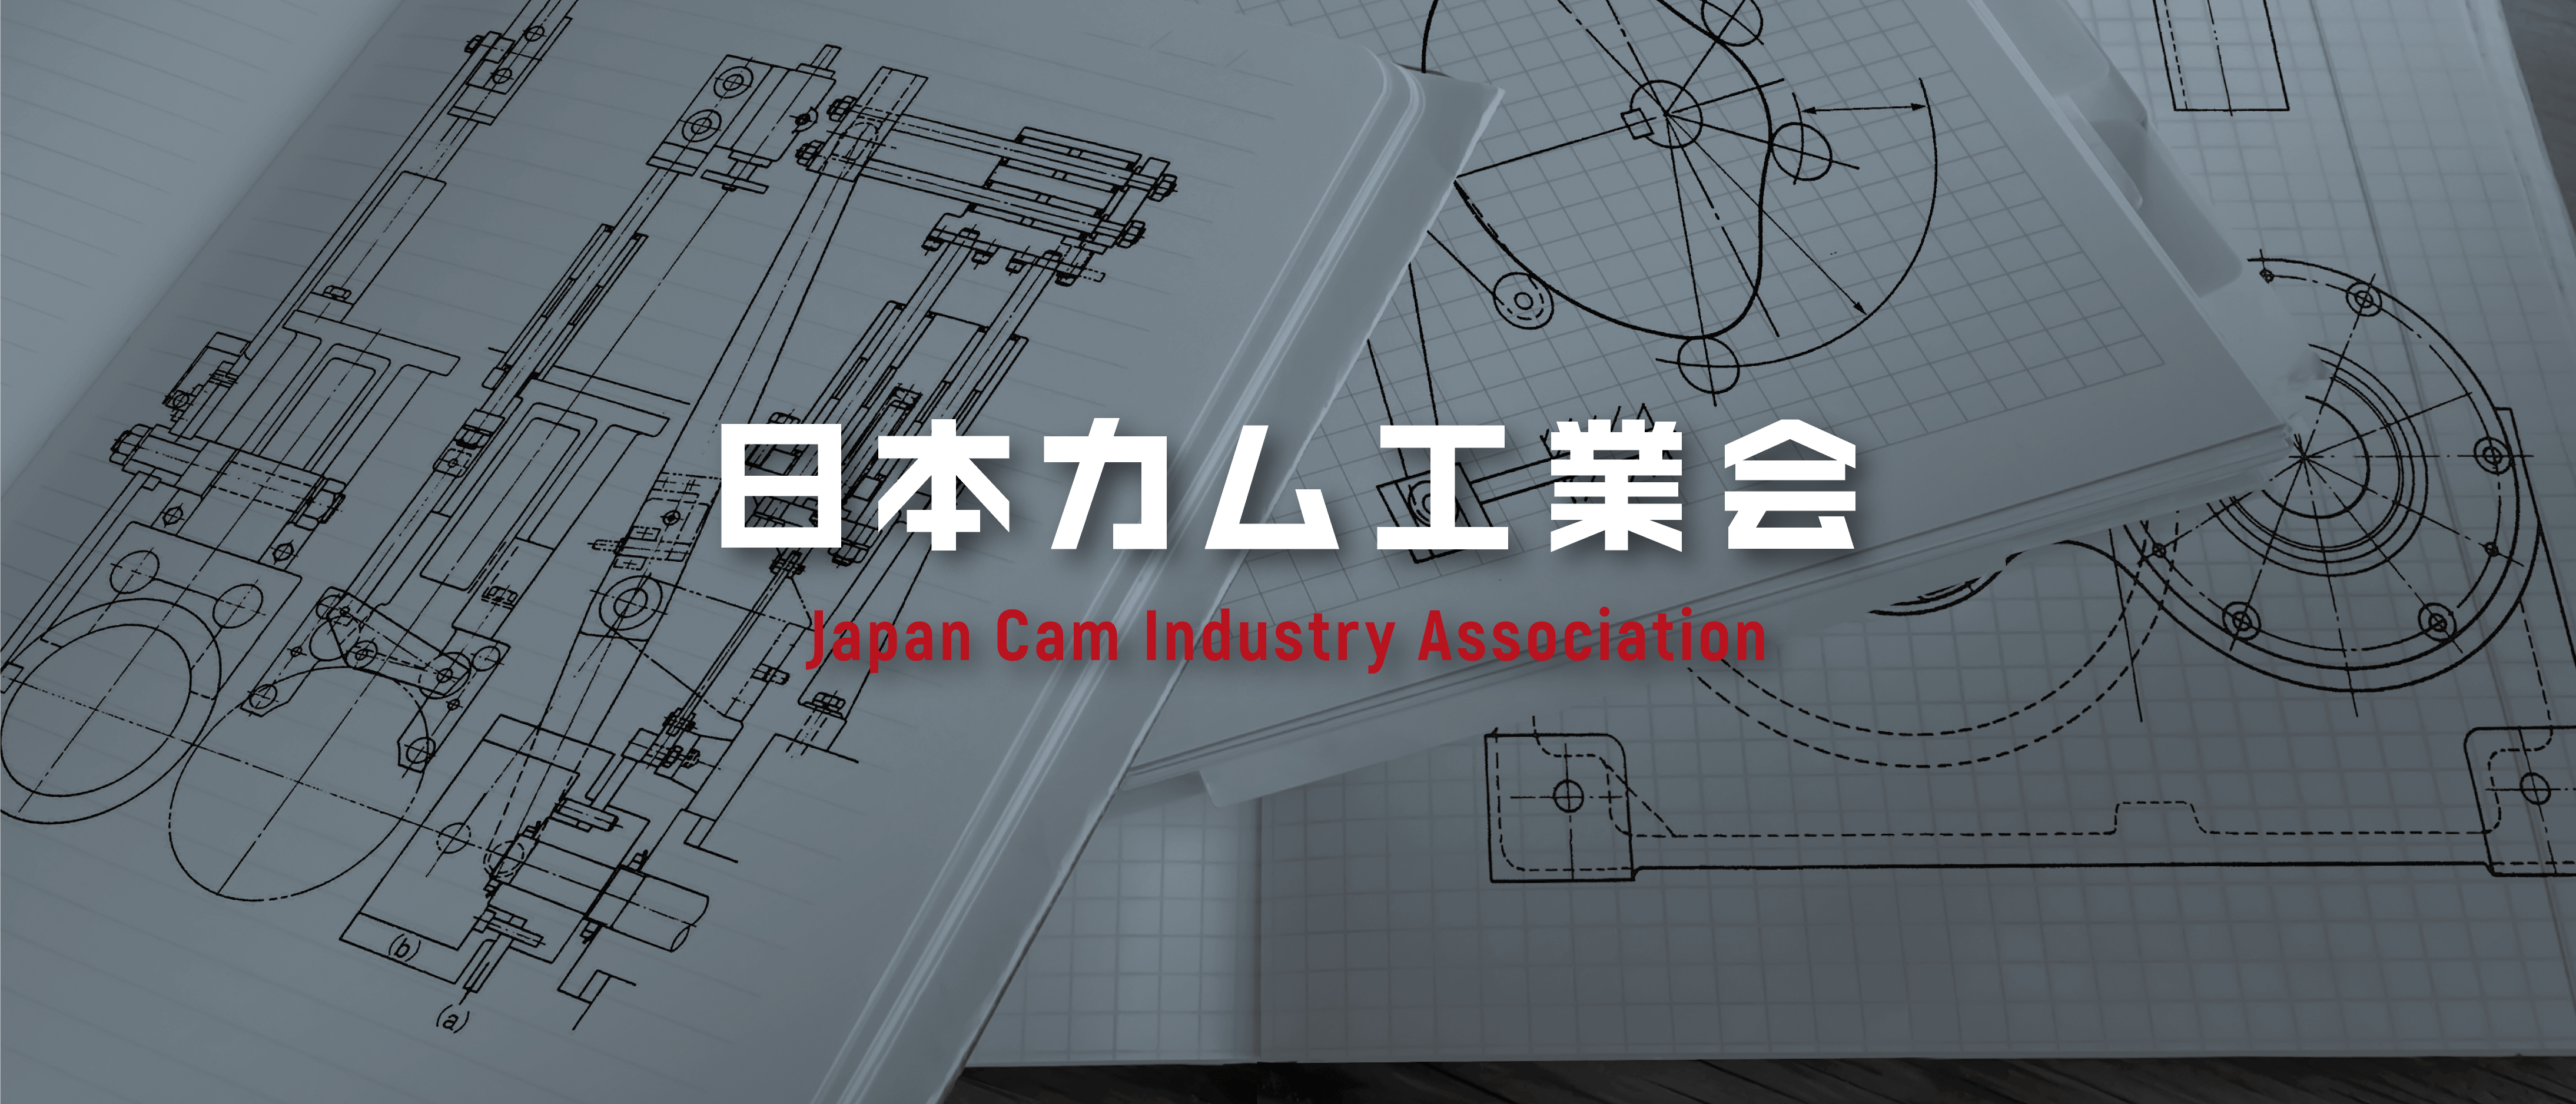 Japan Cam Industry Association